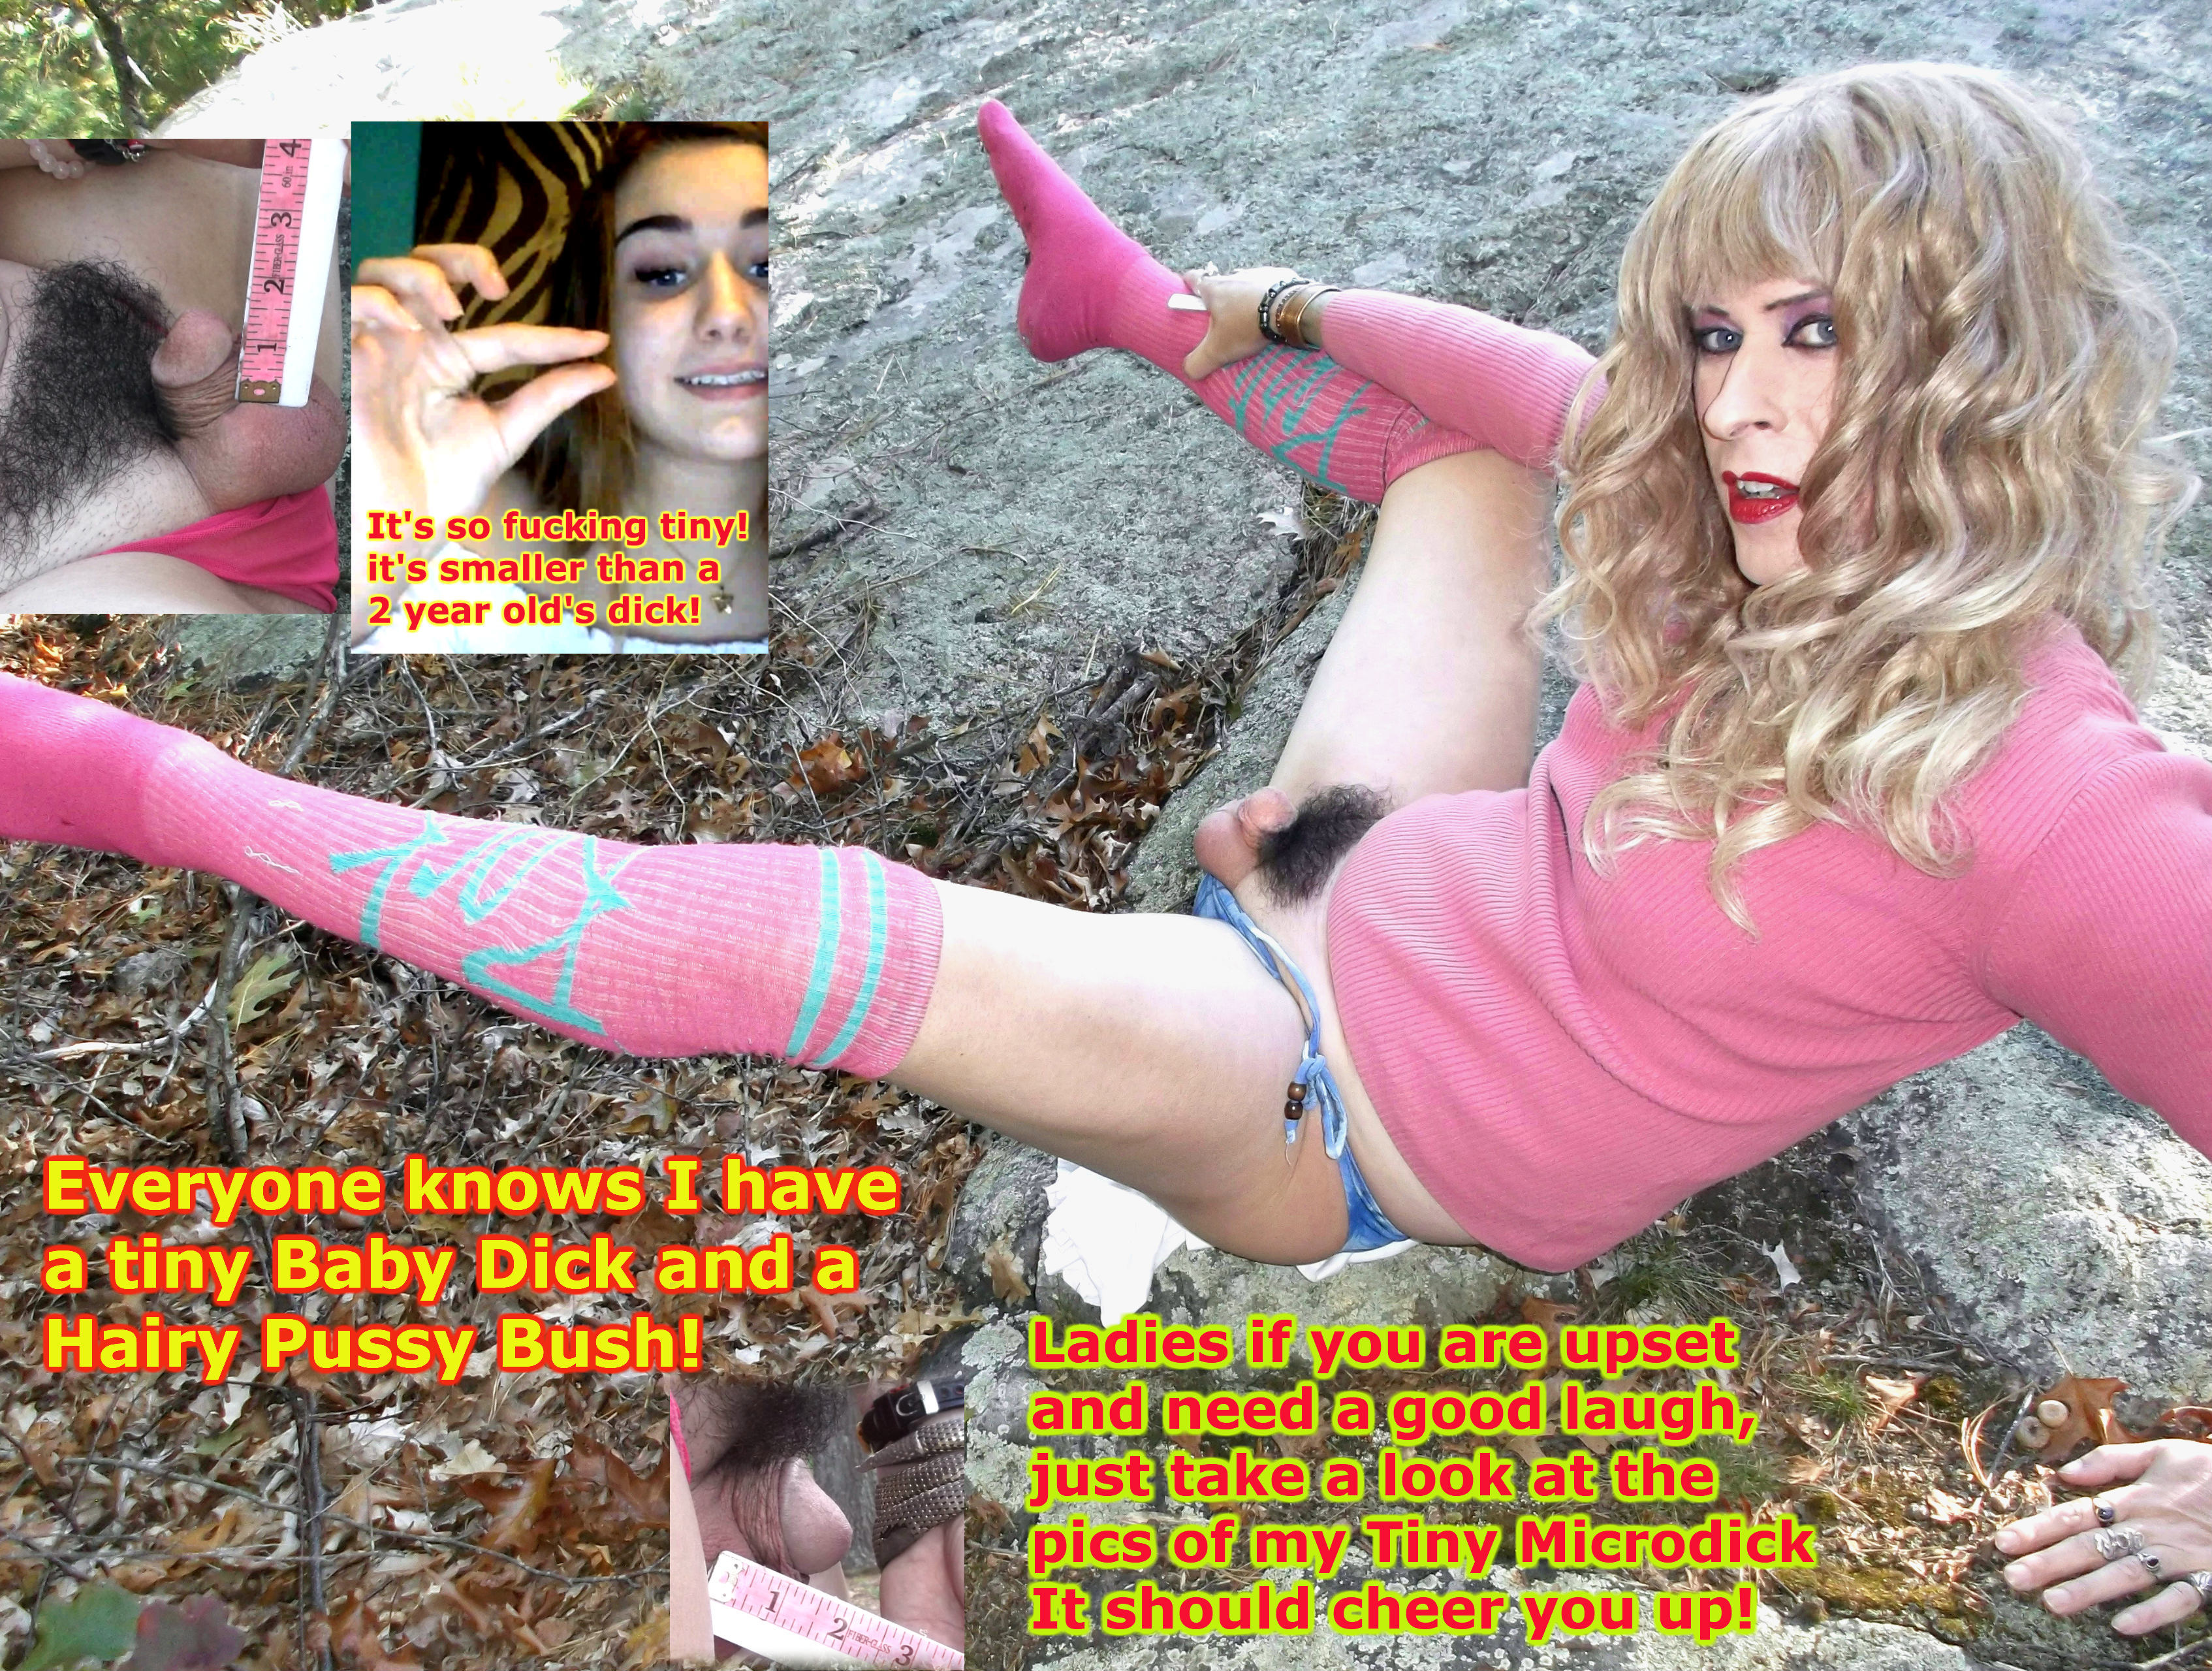 Hairy pussy crossdresser shows her itty bitty baby photo